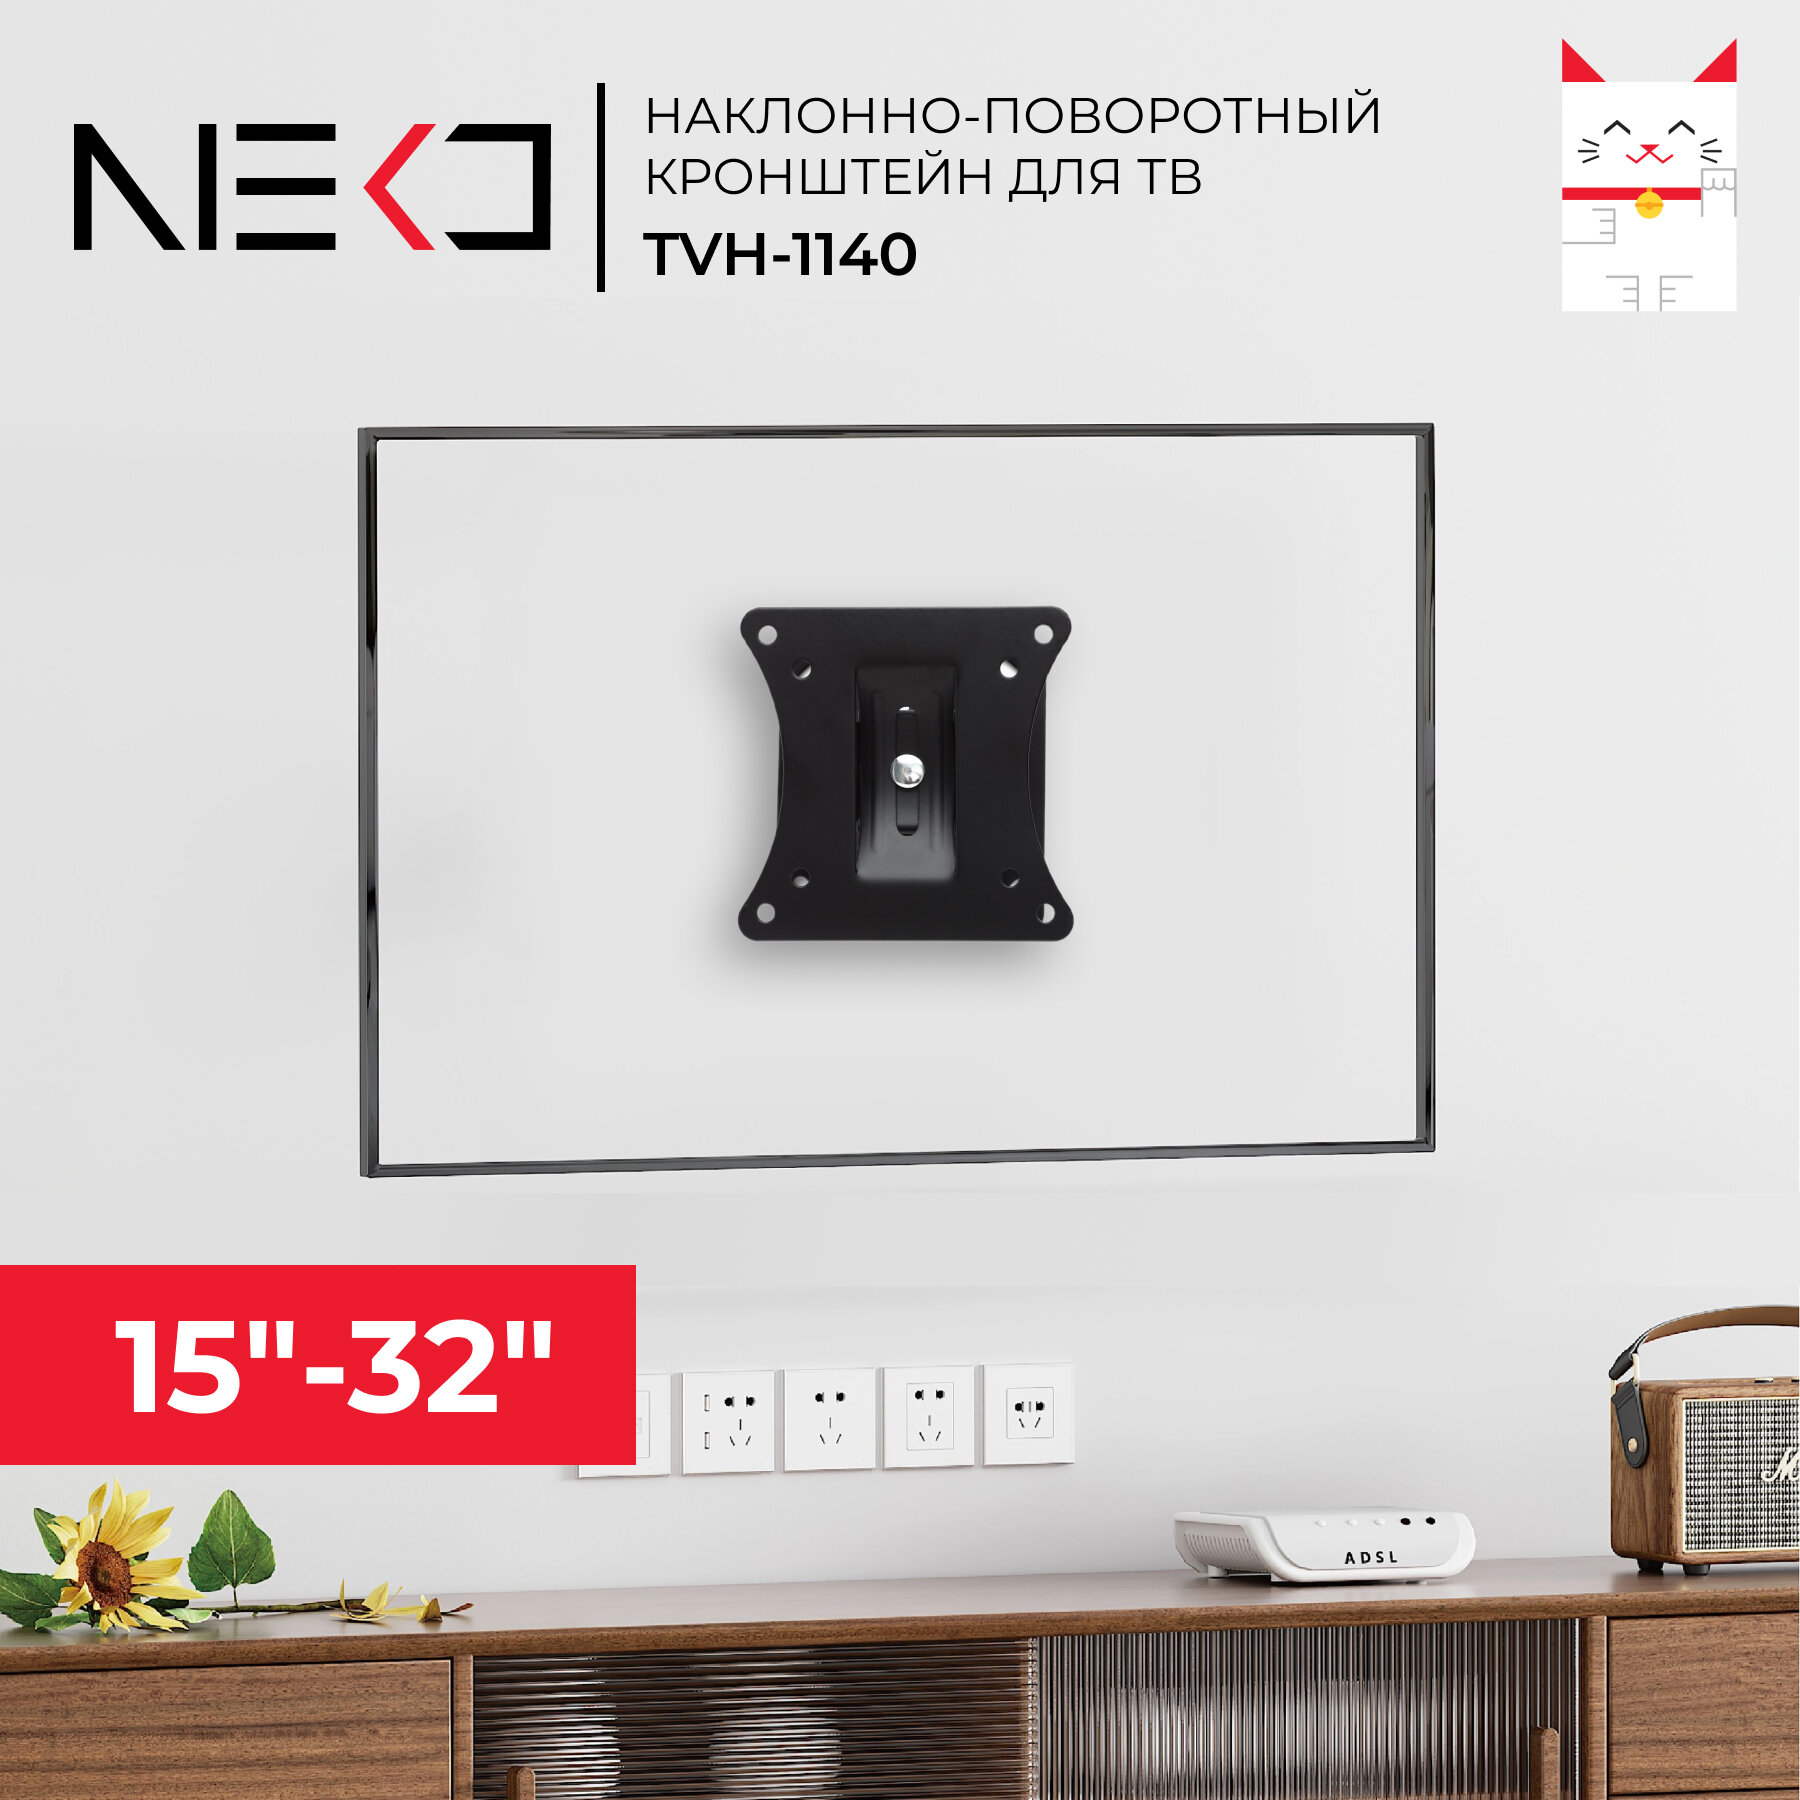 Кронштейн NEKO TVH-1140 черный 15"-32", 1 ст. свободы, max. 20kg от ст. 60мм